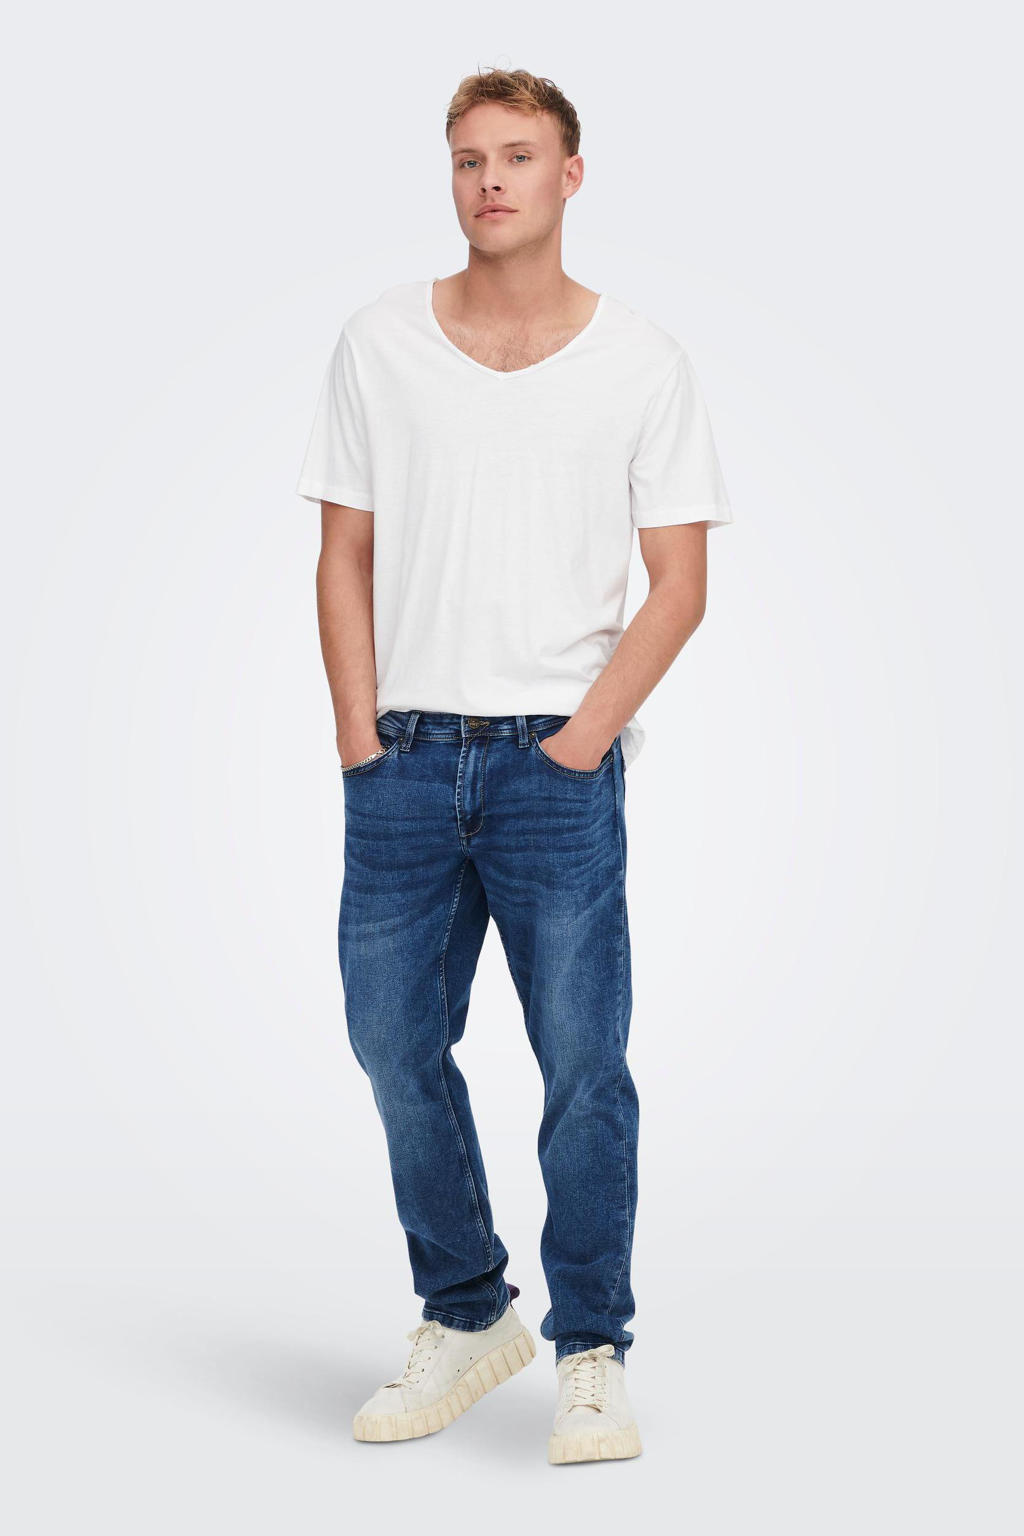 ONLY & SONS regular fit jeans ONSWEFT blue denim 1886